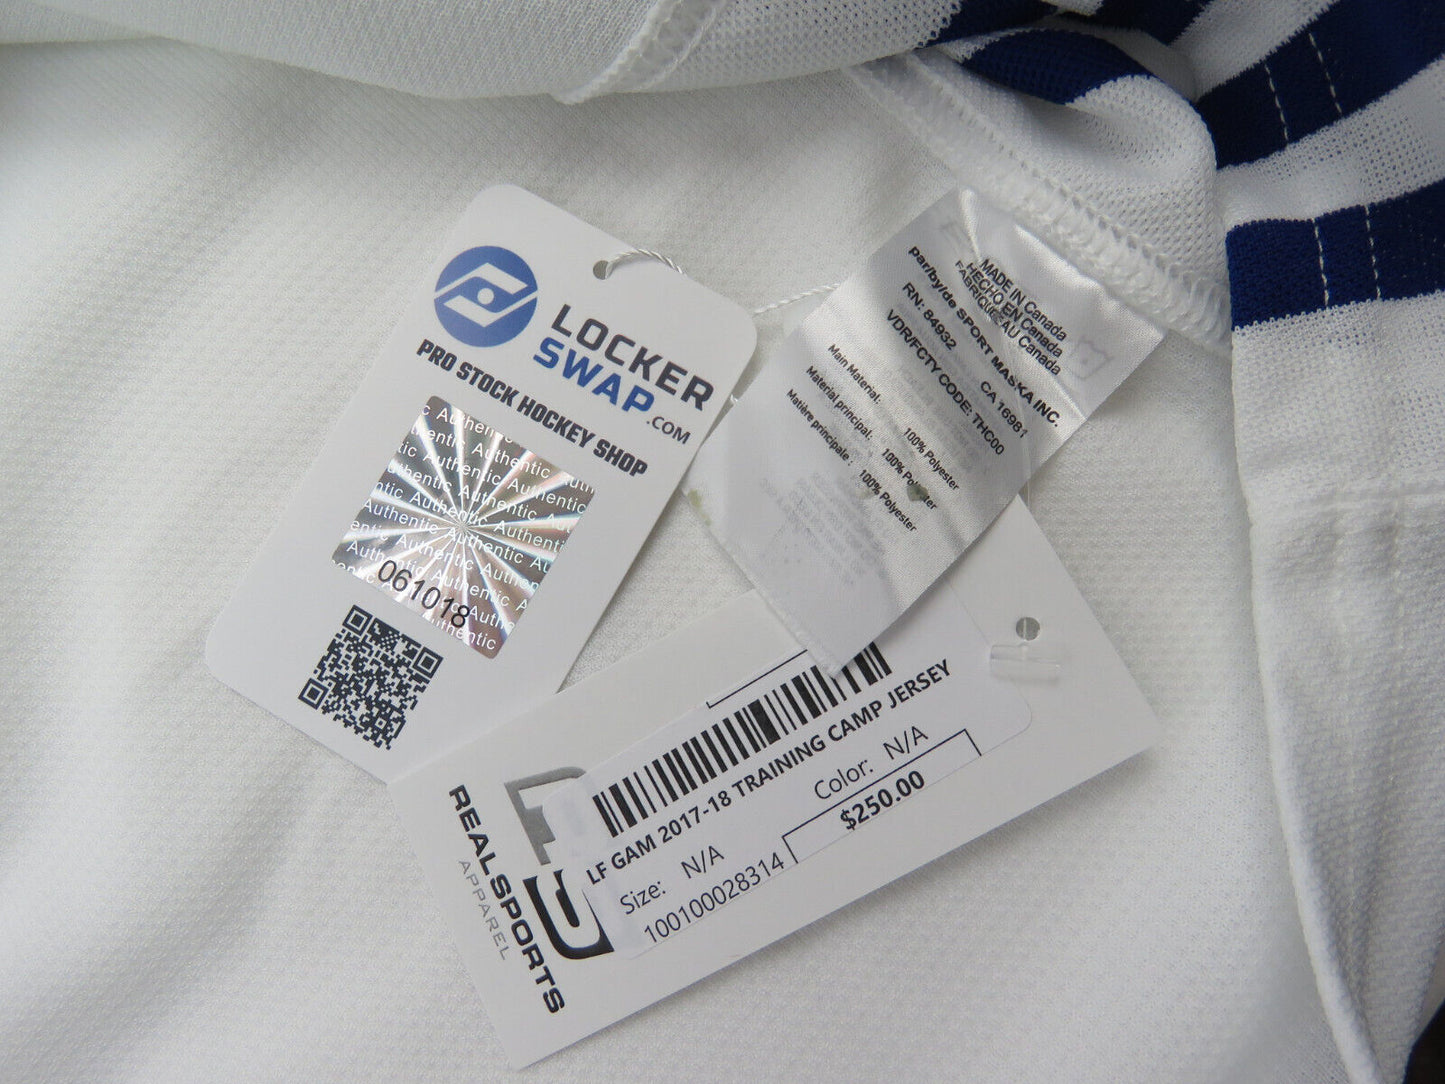 Adidas Toronto Maple Leafs Practice Worn Authentic NHL Hockey Jersey #74 Size 58